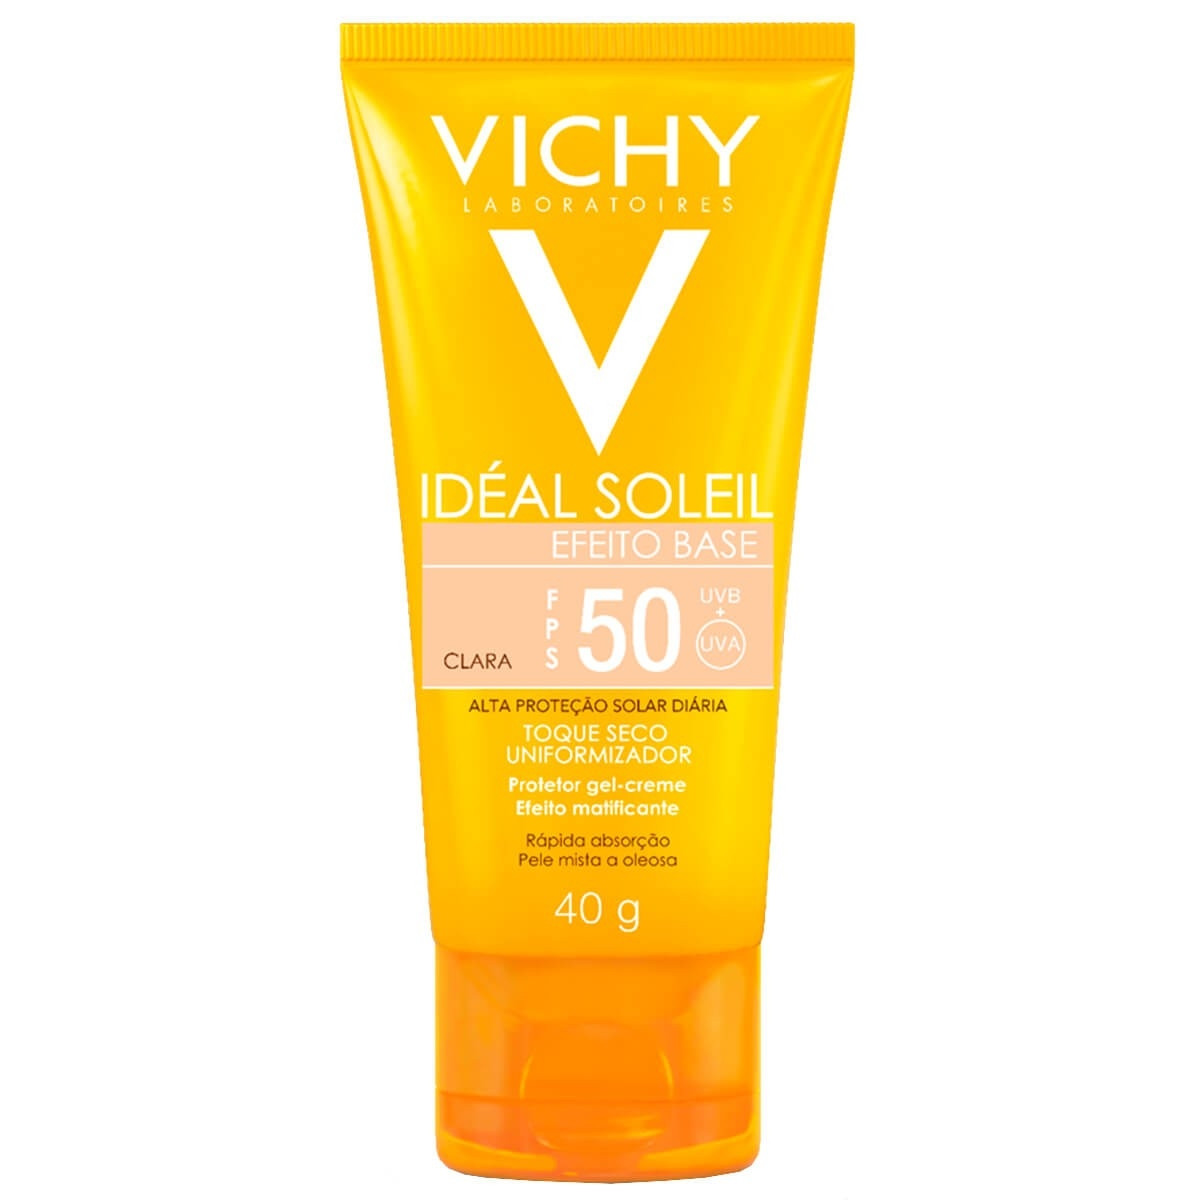 Vichy Ideal Soleil Efeito Base FPS 50 Cor Clara 40g